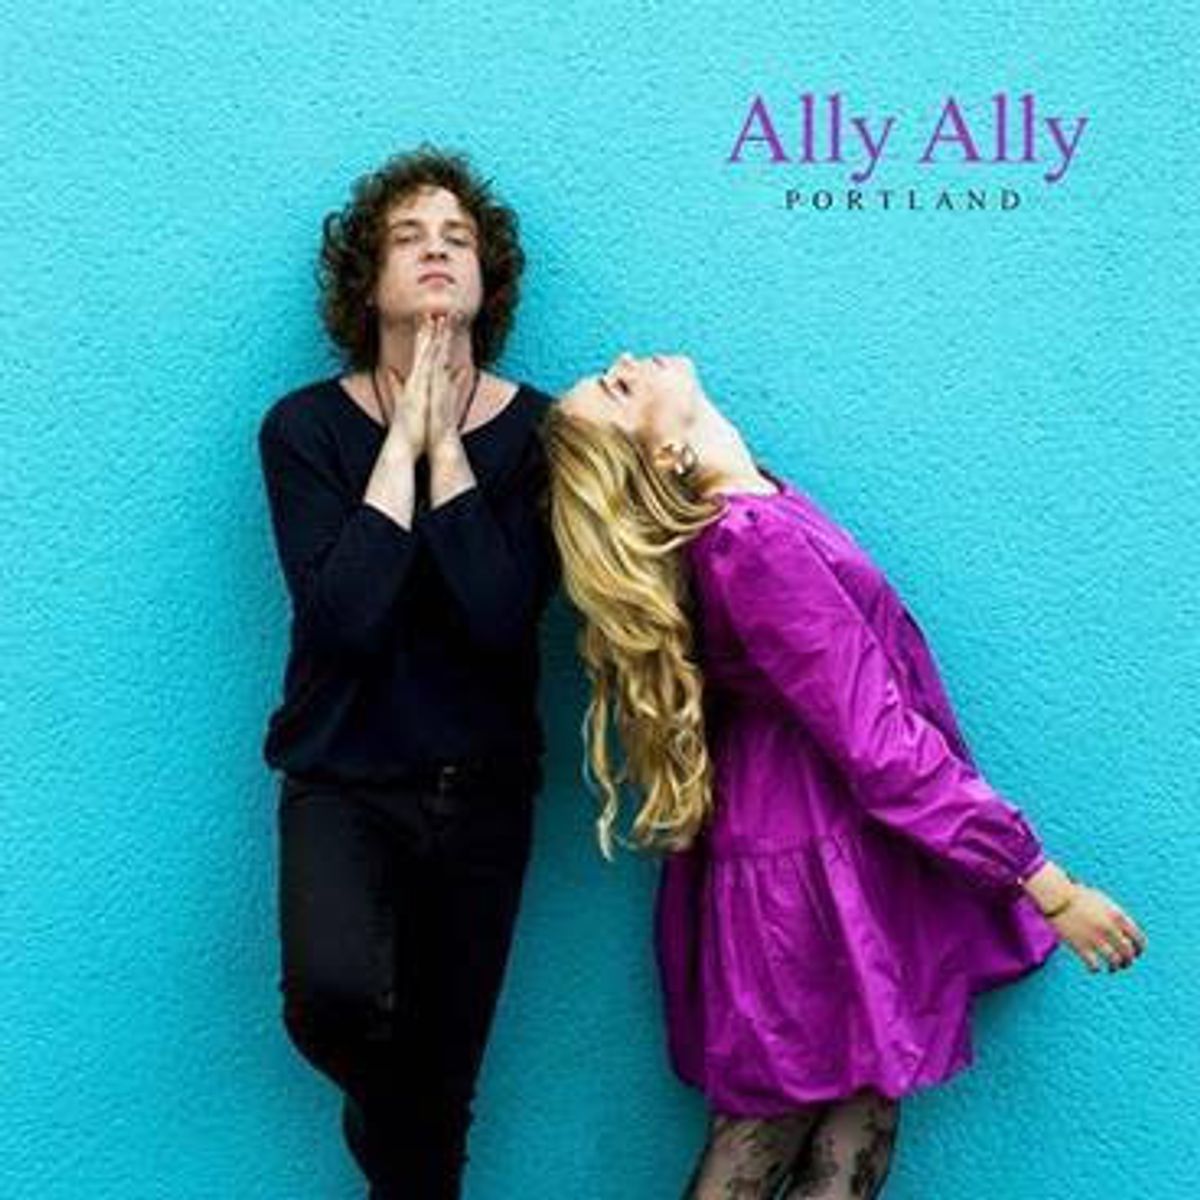 Portland - Ally Ally